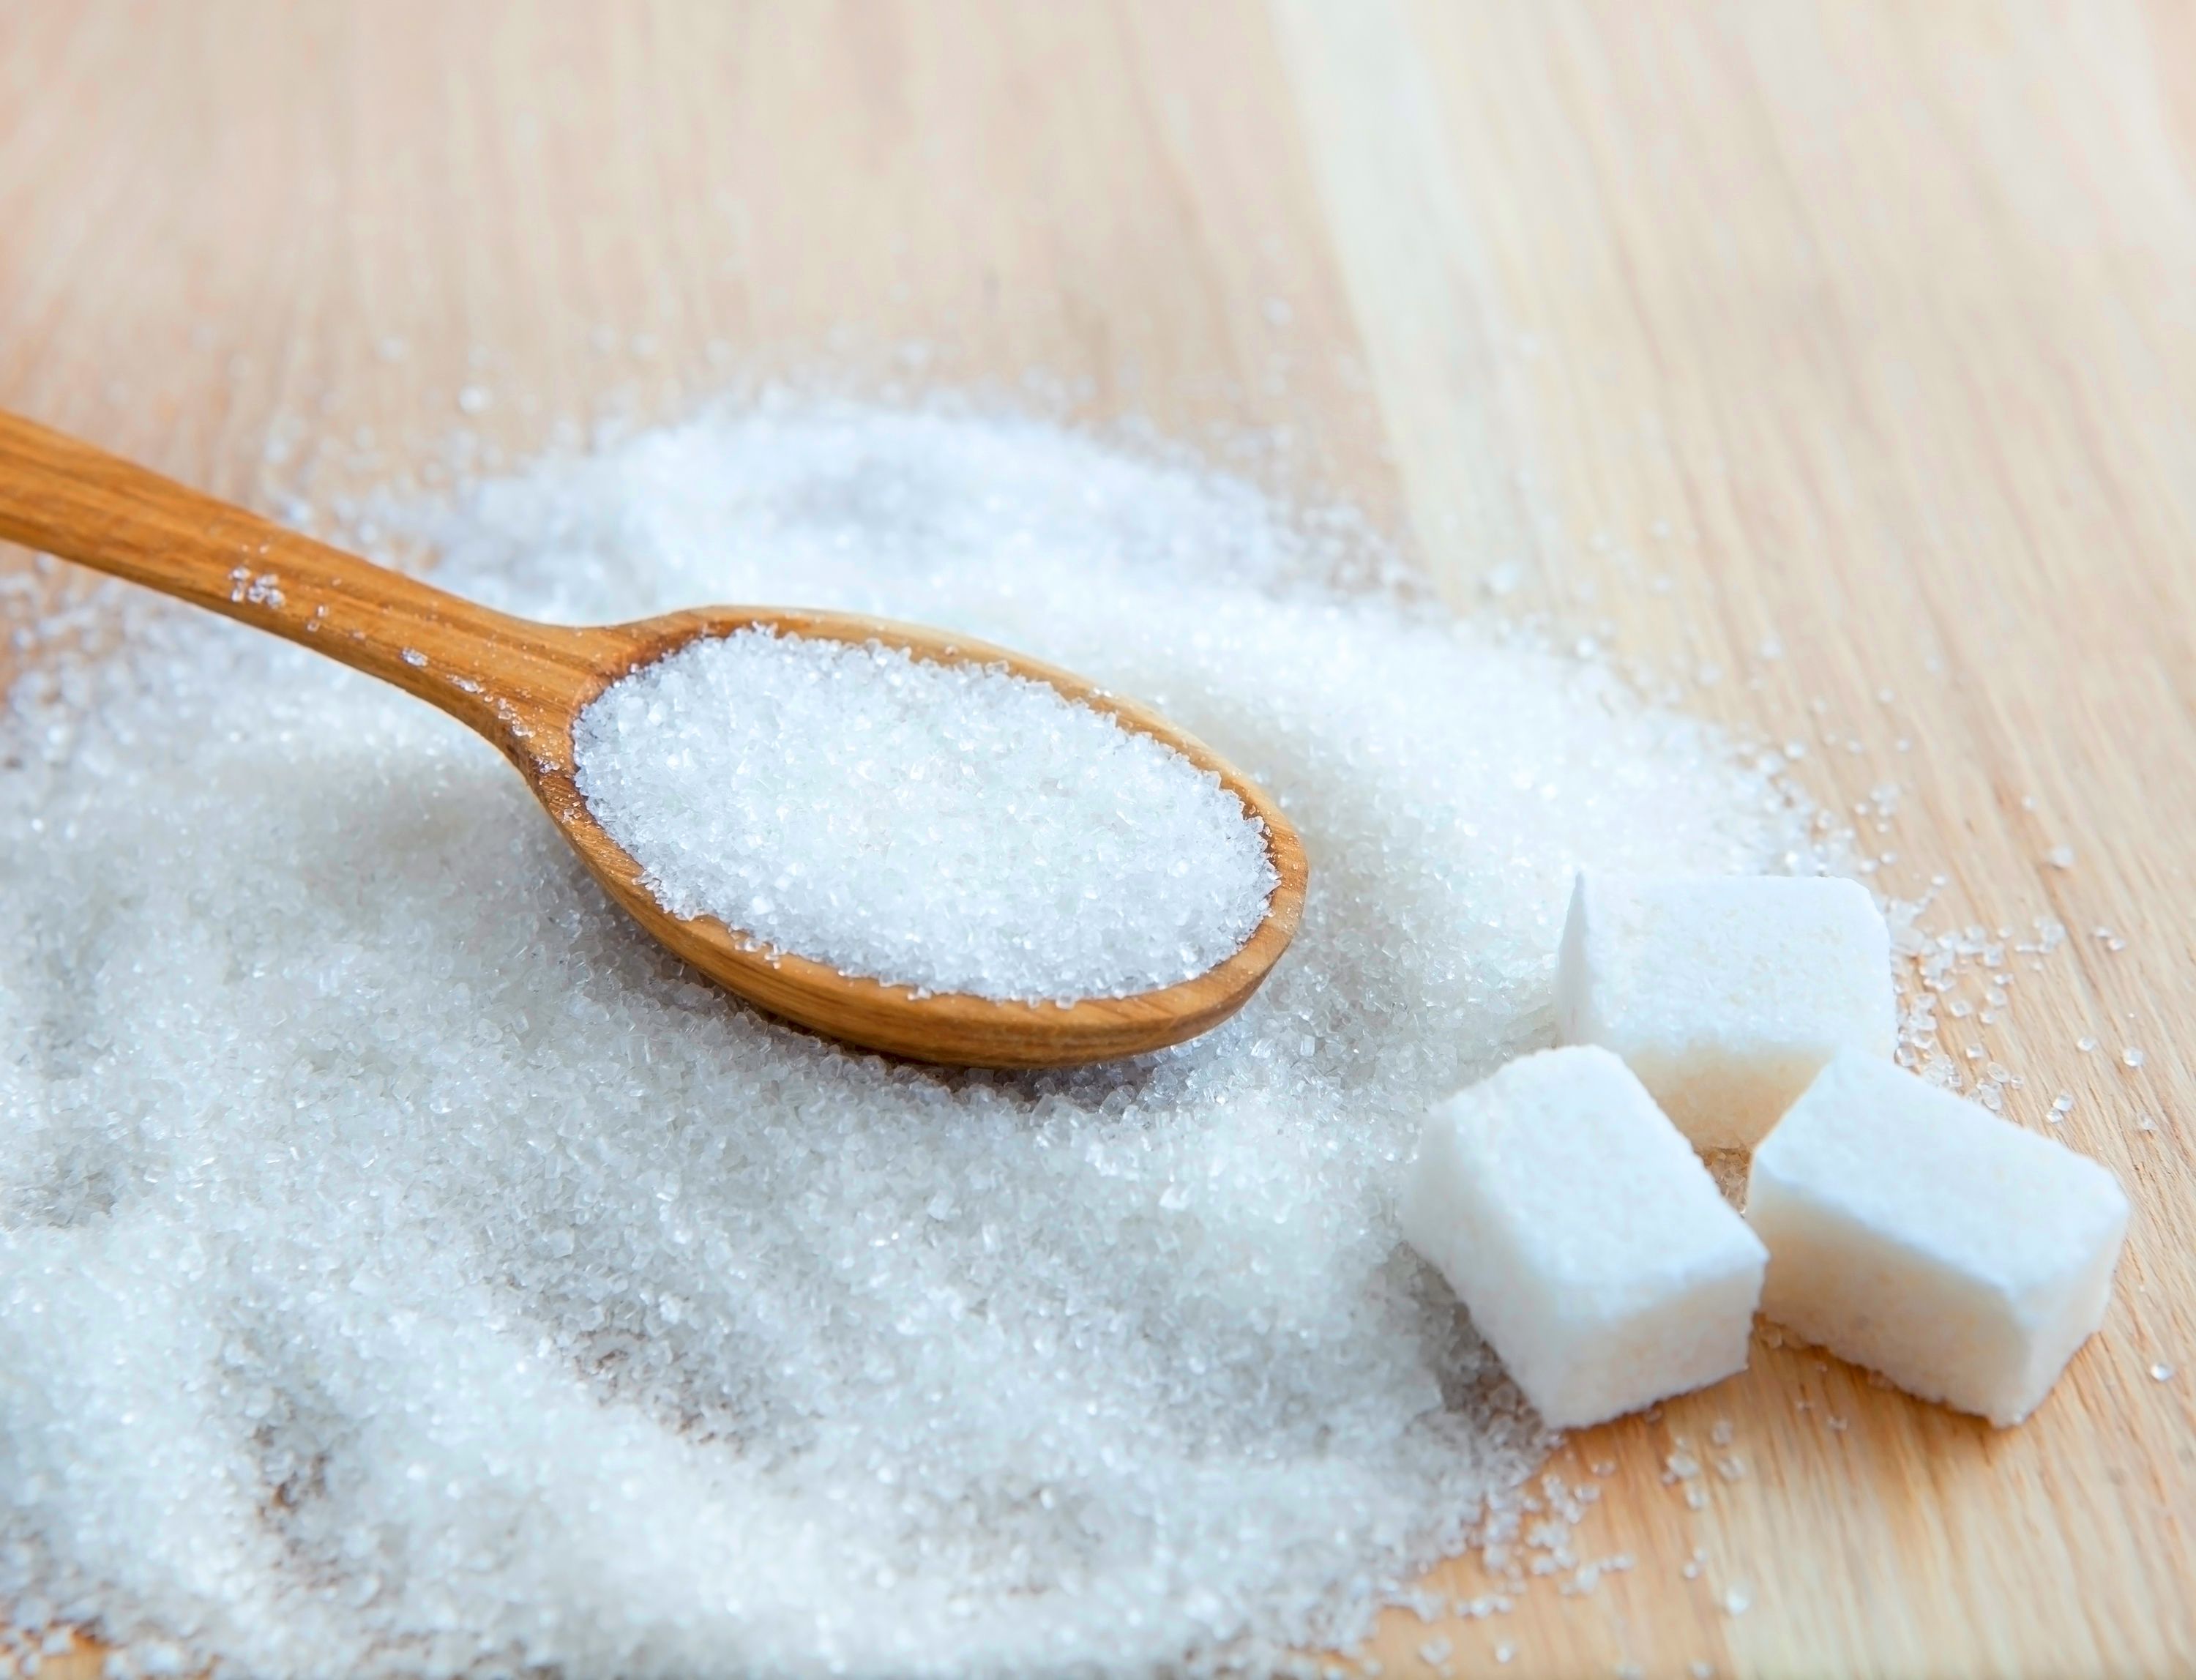 Sugars and sugar substitutes